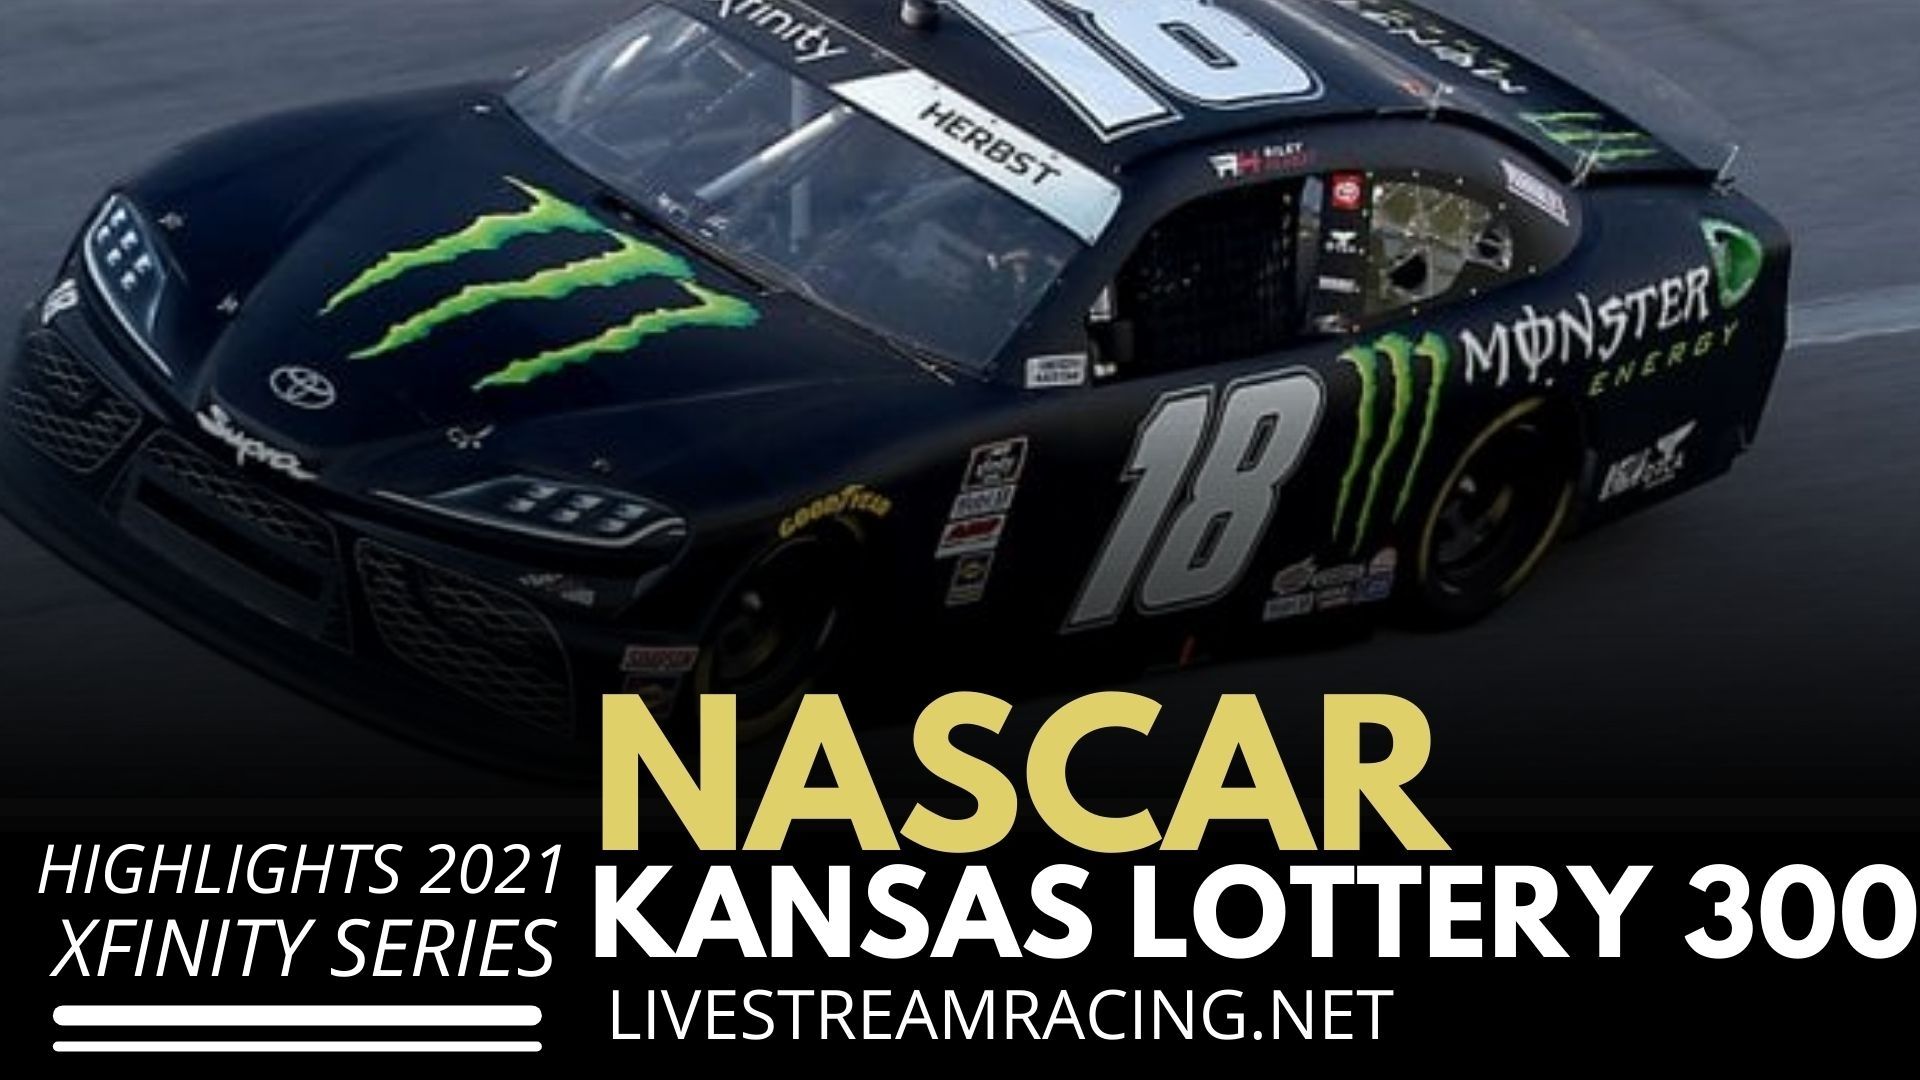 Nascar Kansas Lottery 300 Highlights 2021 Xfinity Series